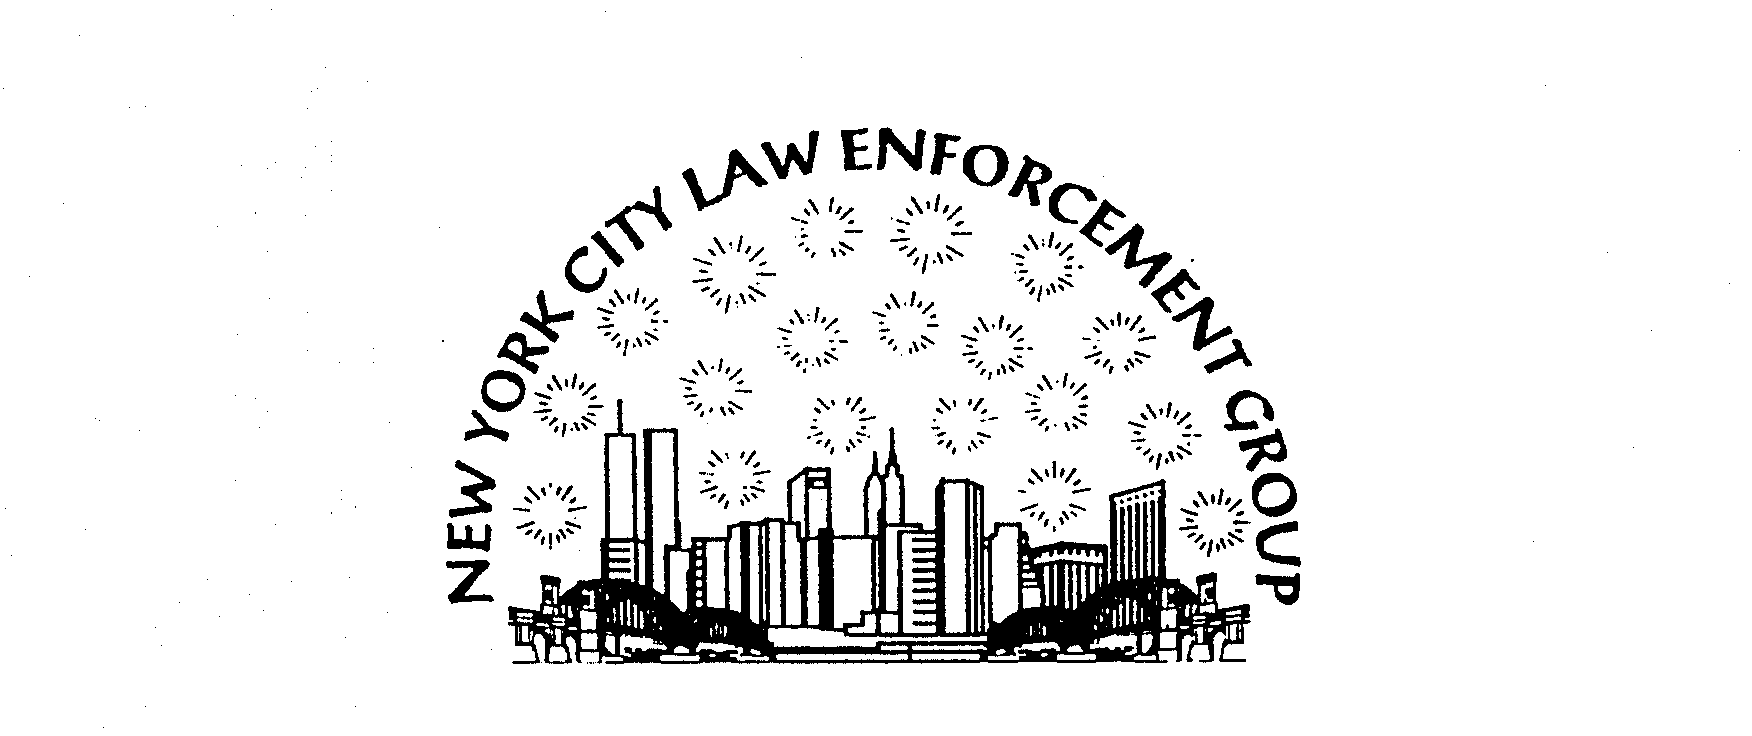  NEW YORK CITY LAW ENFORCEMENT GROUP